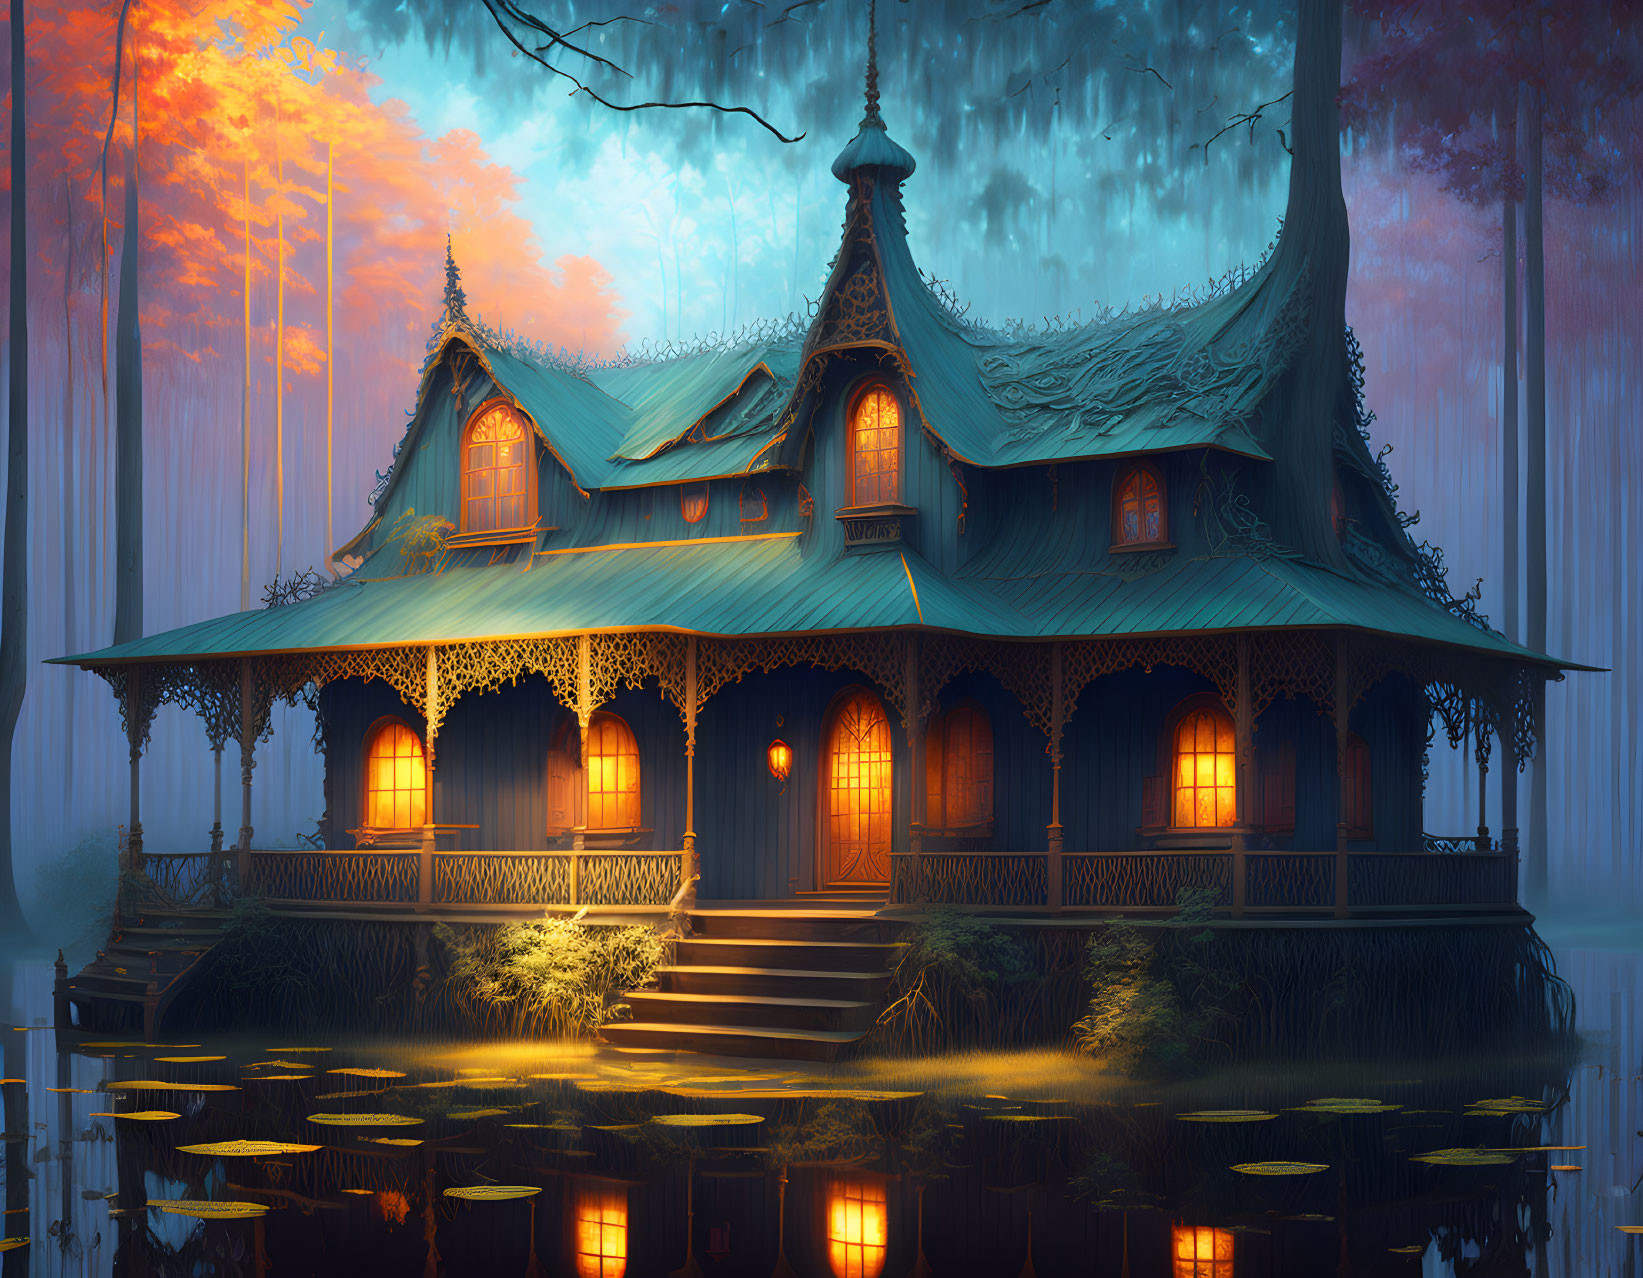 The Swamp House